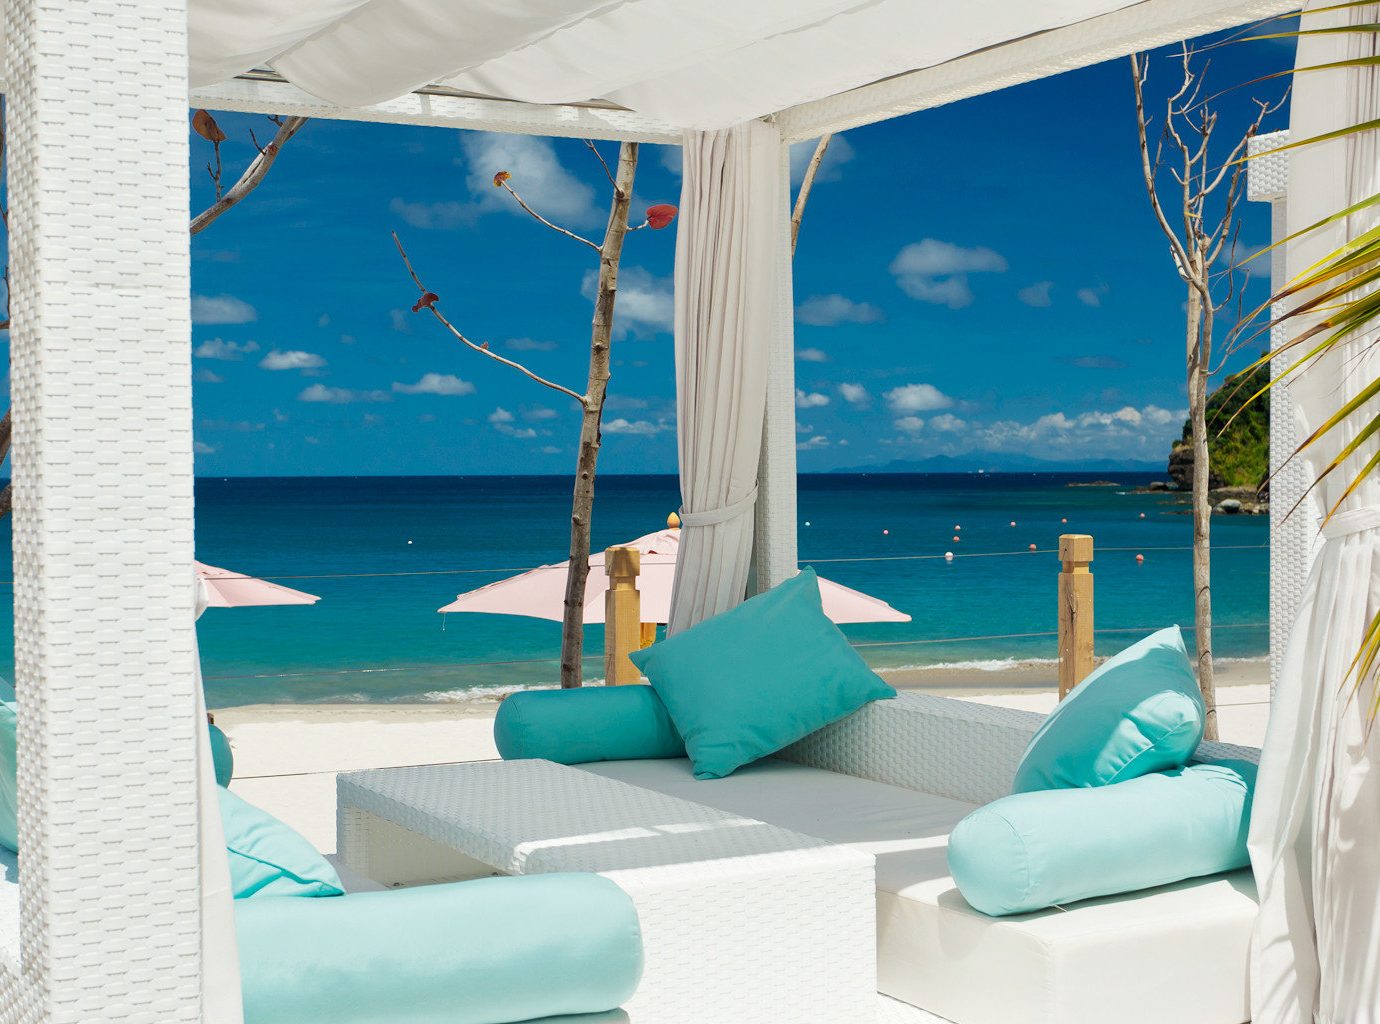 Hotels blue room chair swimming pool caribbean vacation Resort interior design estate Villa apartment furniture several